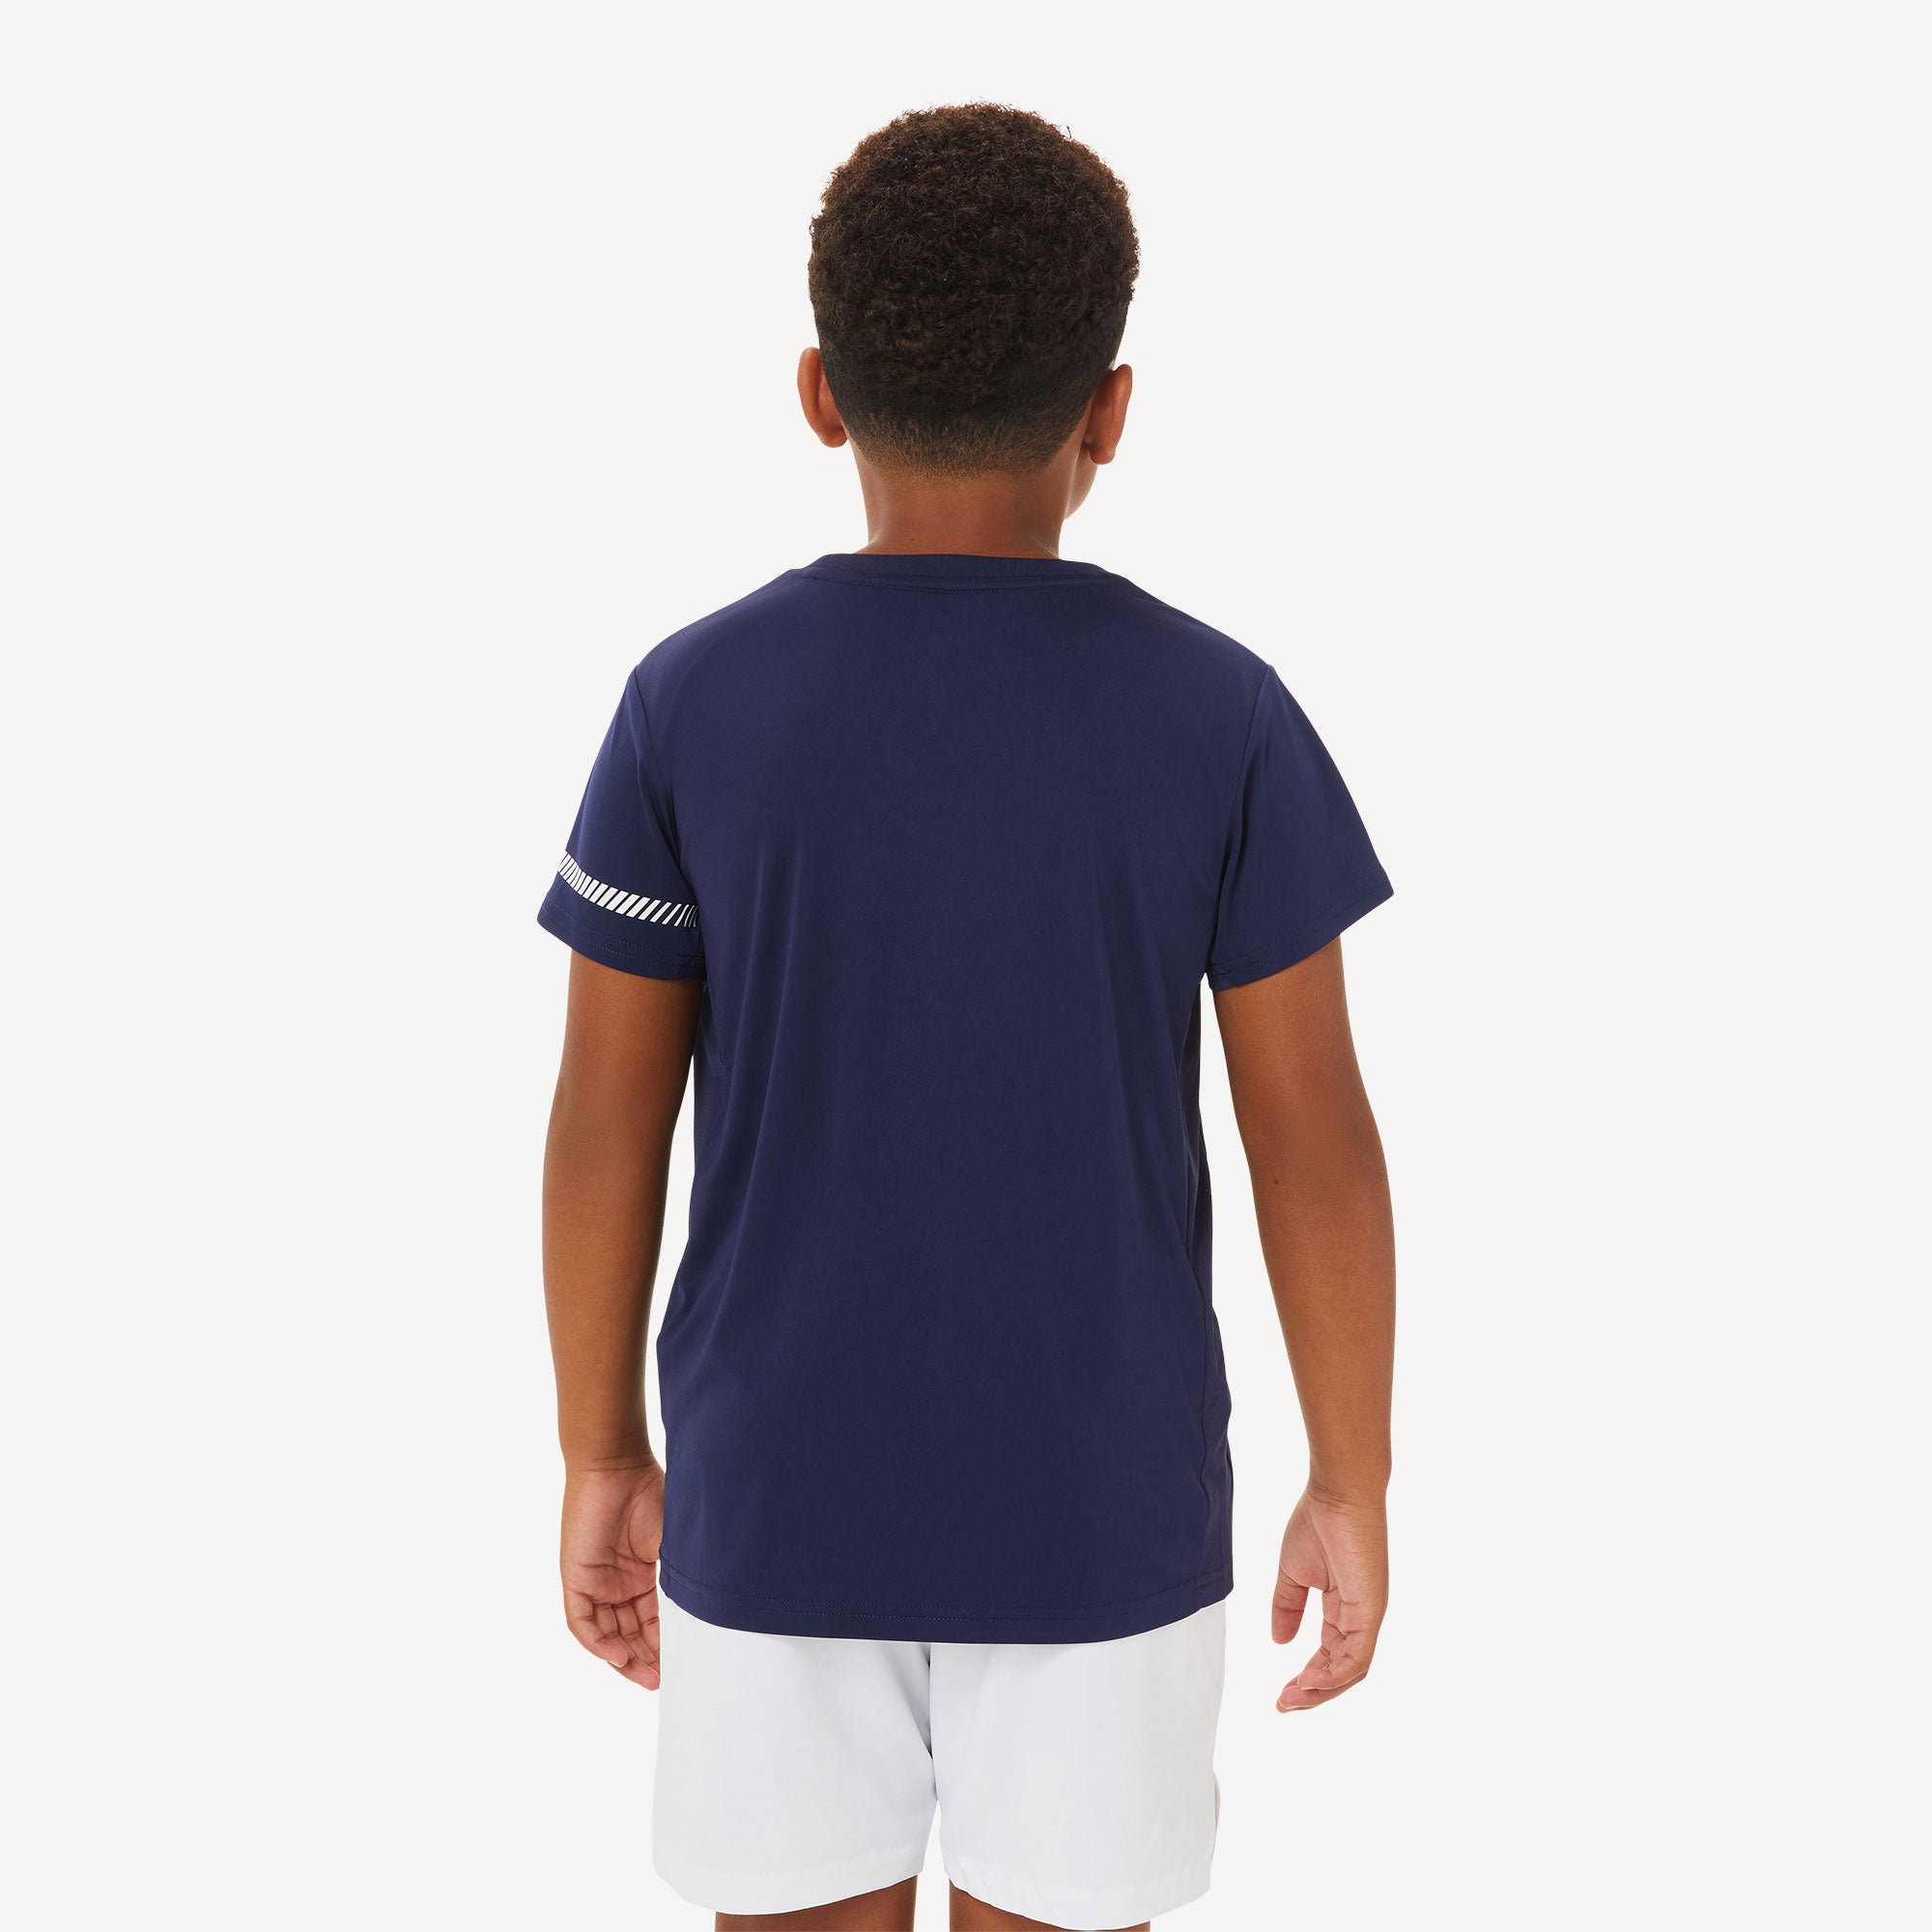 ASICS Boys' Tennis Shirt Blue (2)